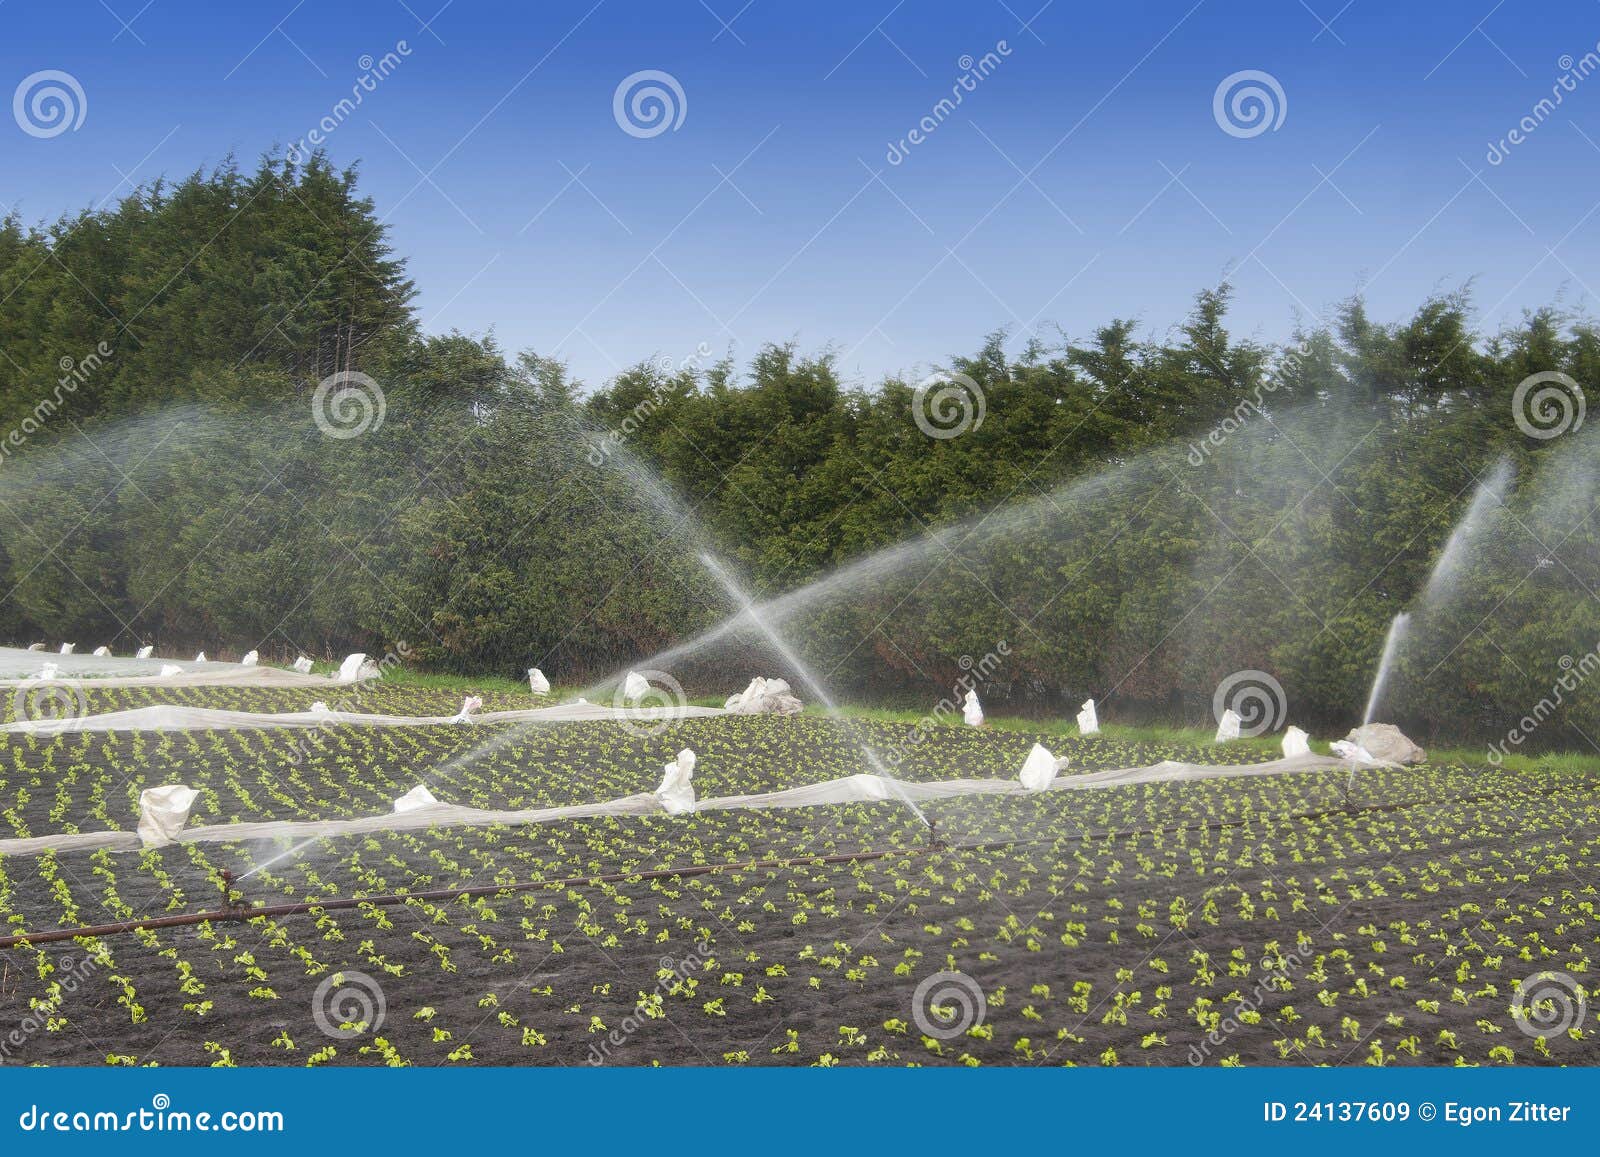 water crops irrigation